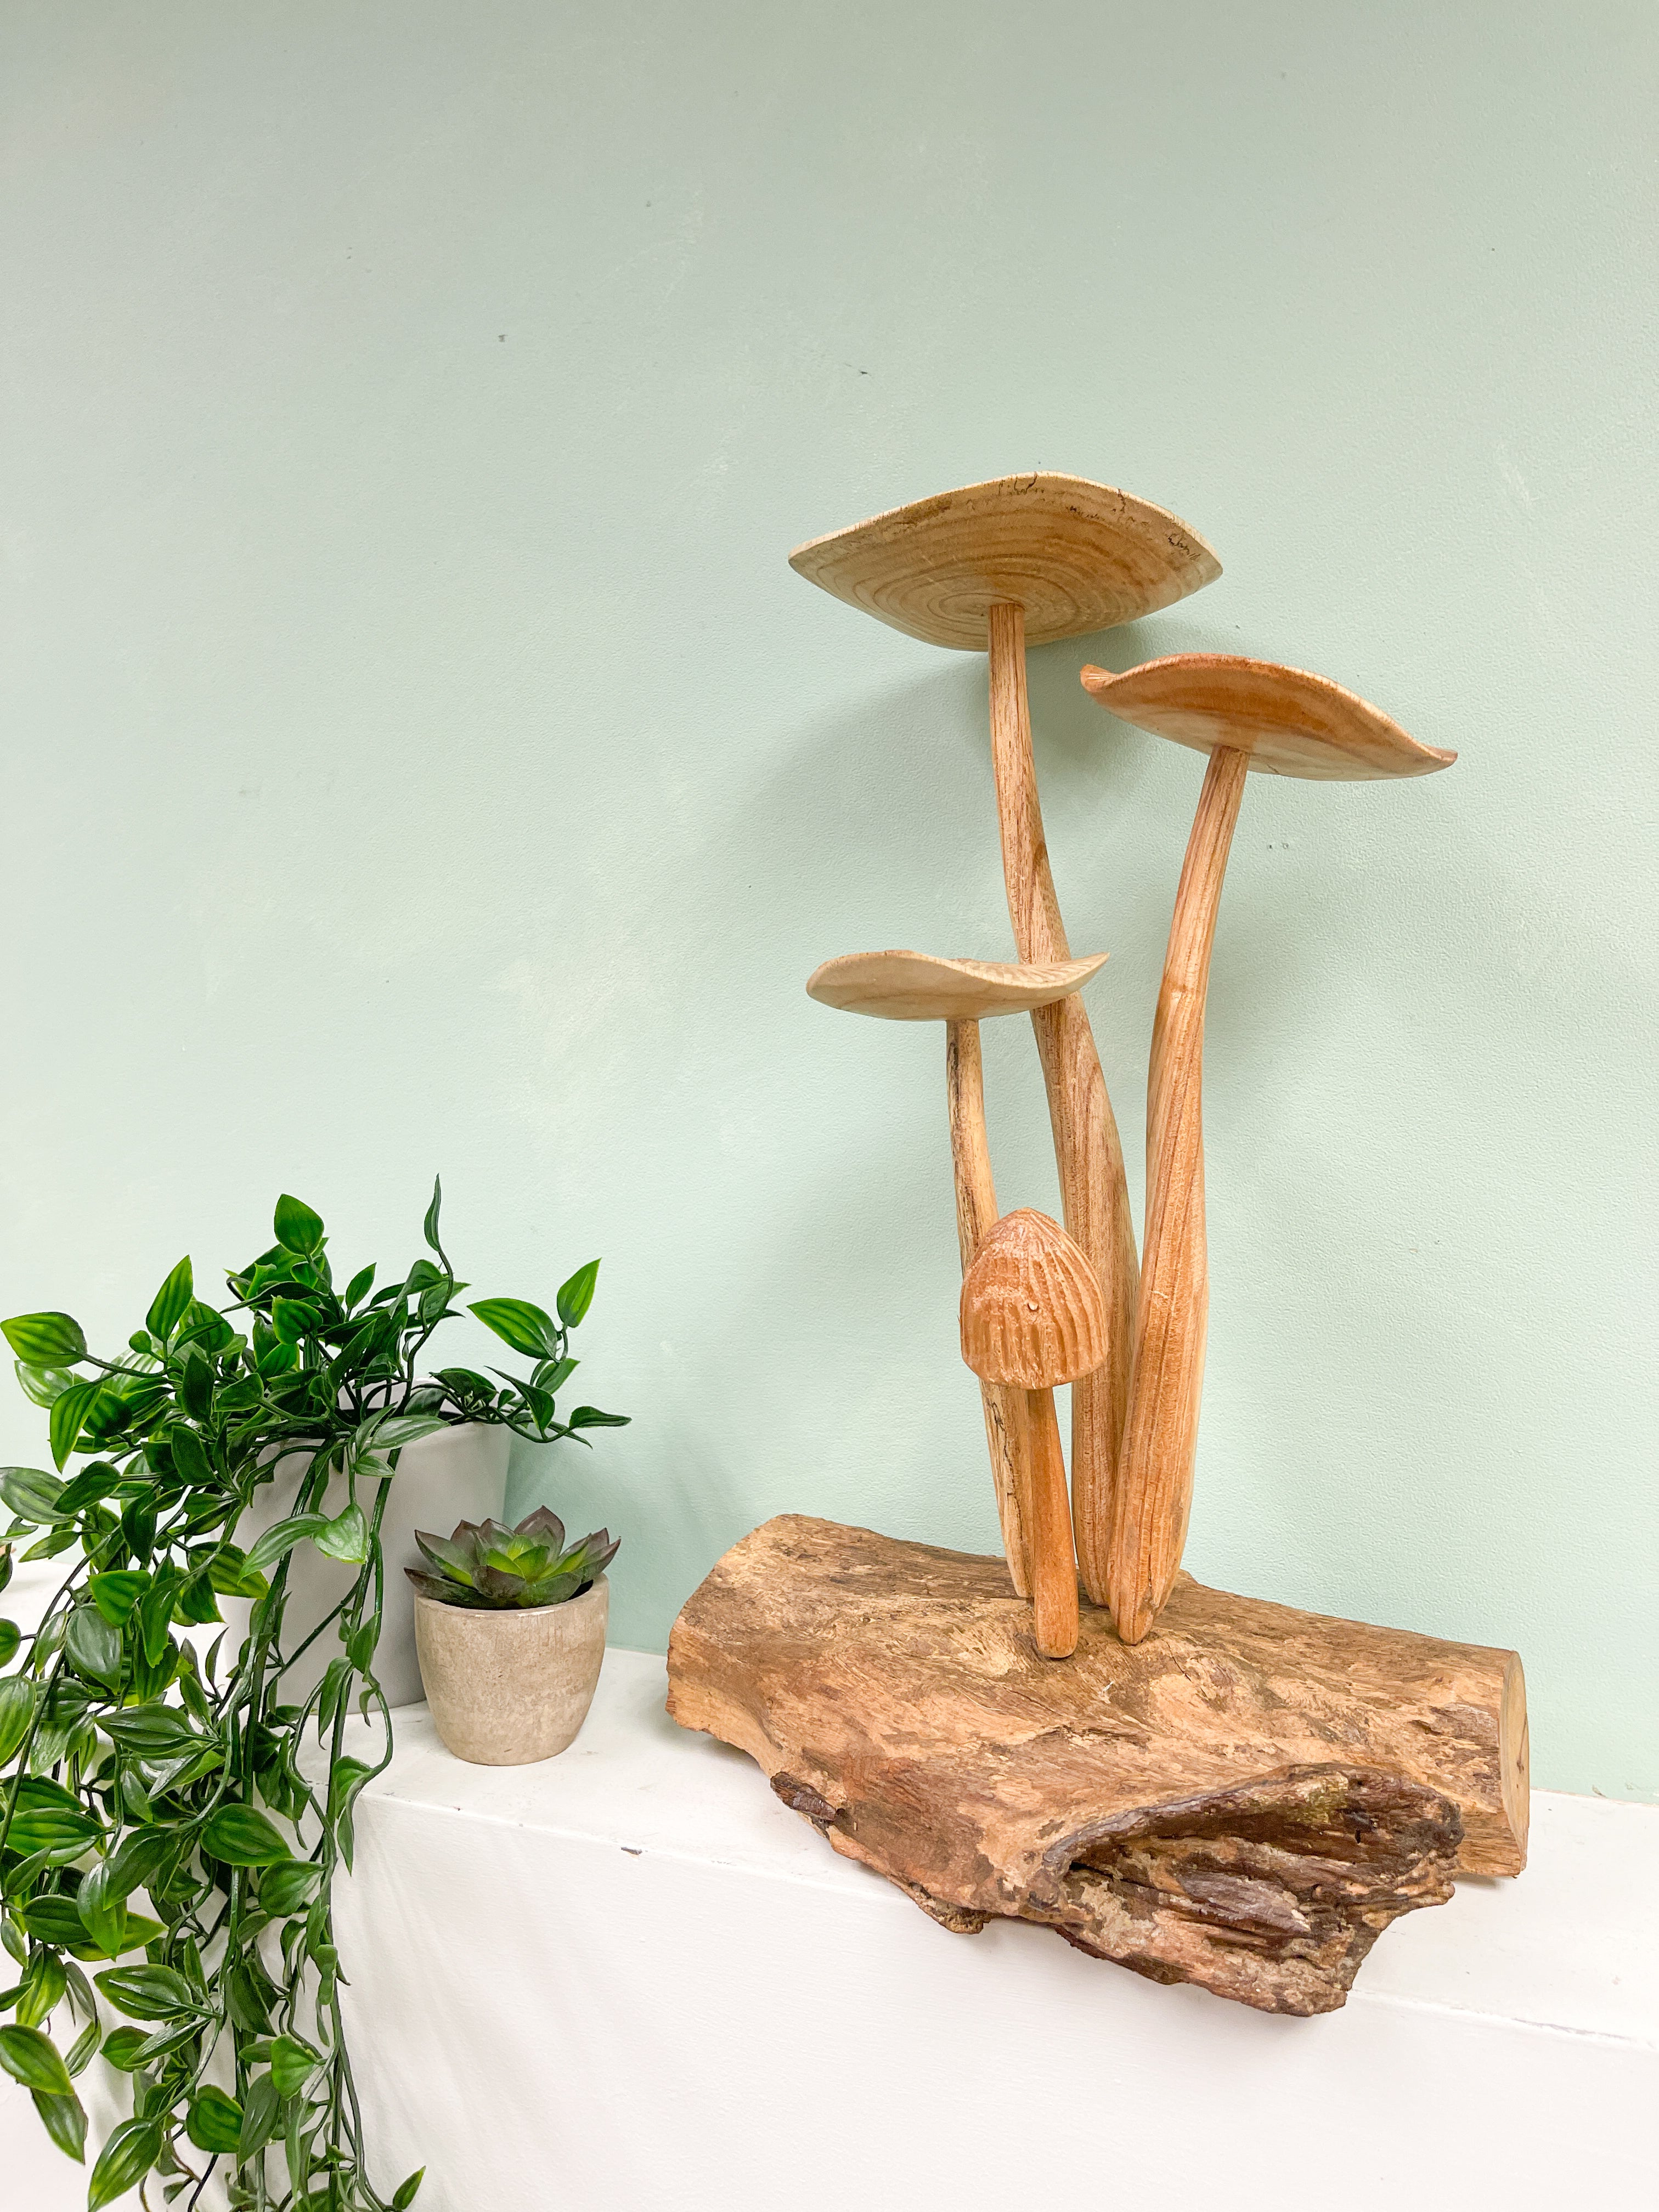 4 Wooden Carved Mushrooms on Wood Log